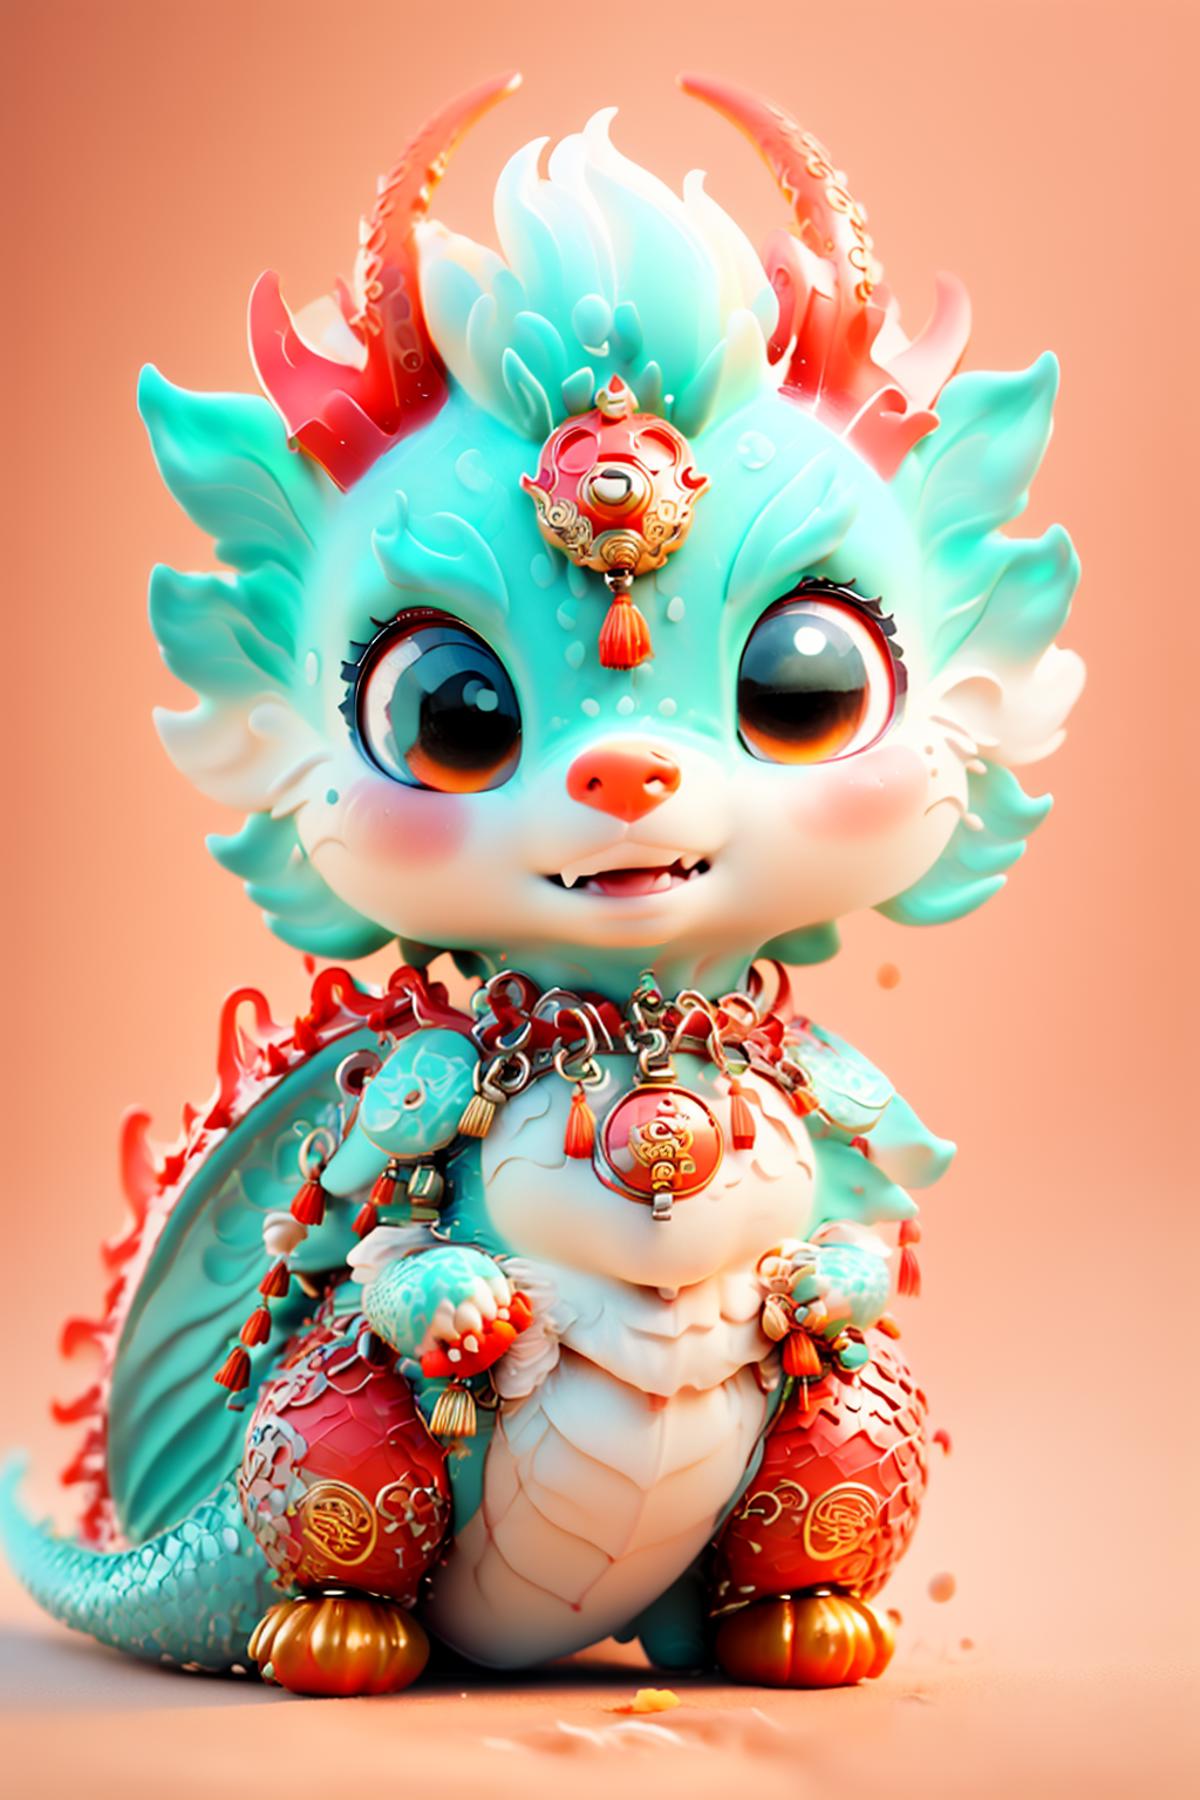 Cute Chinese Dragon | 可爱中国龙 | 新春龙年贺年 image by zailzkz